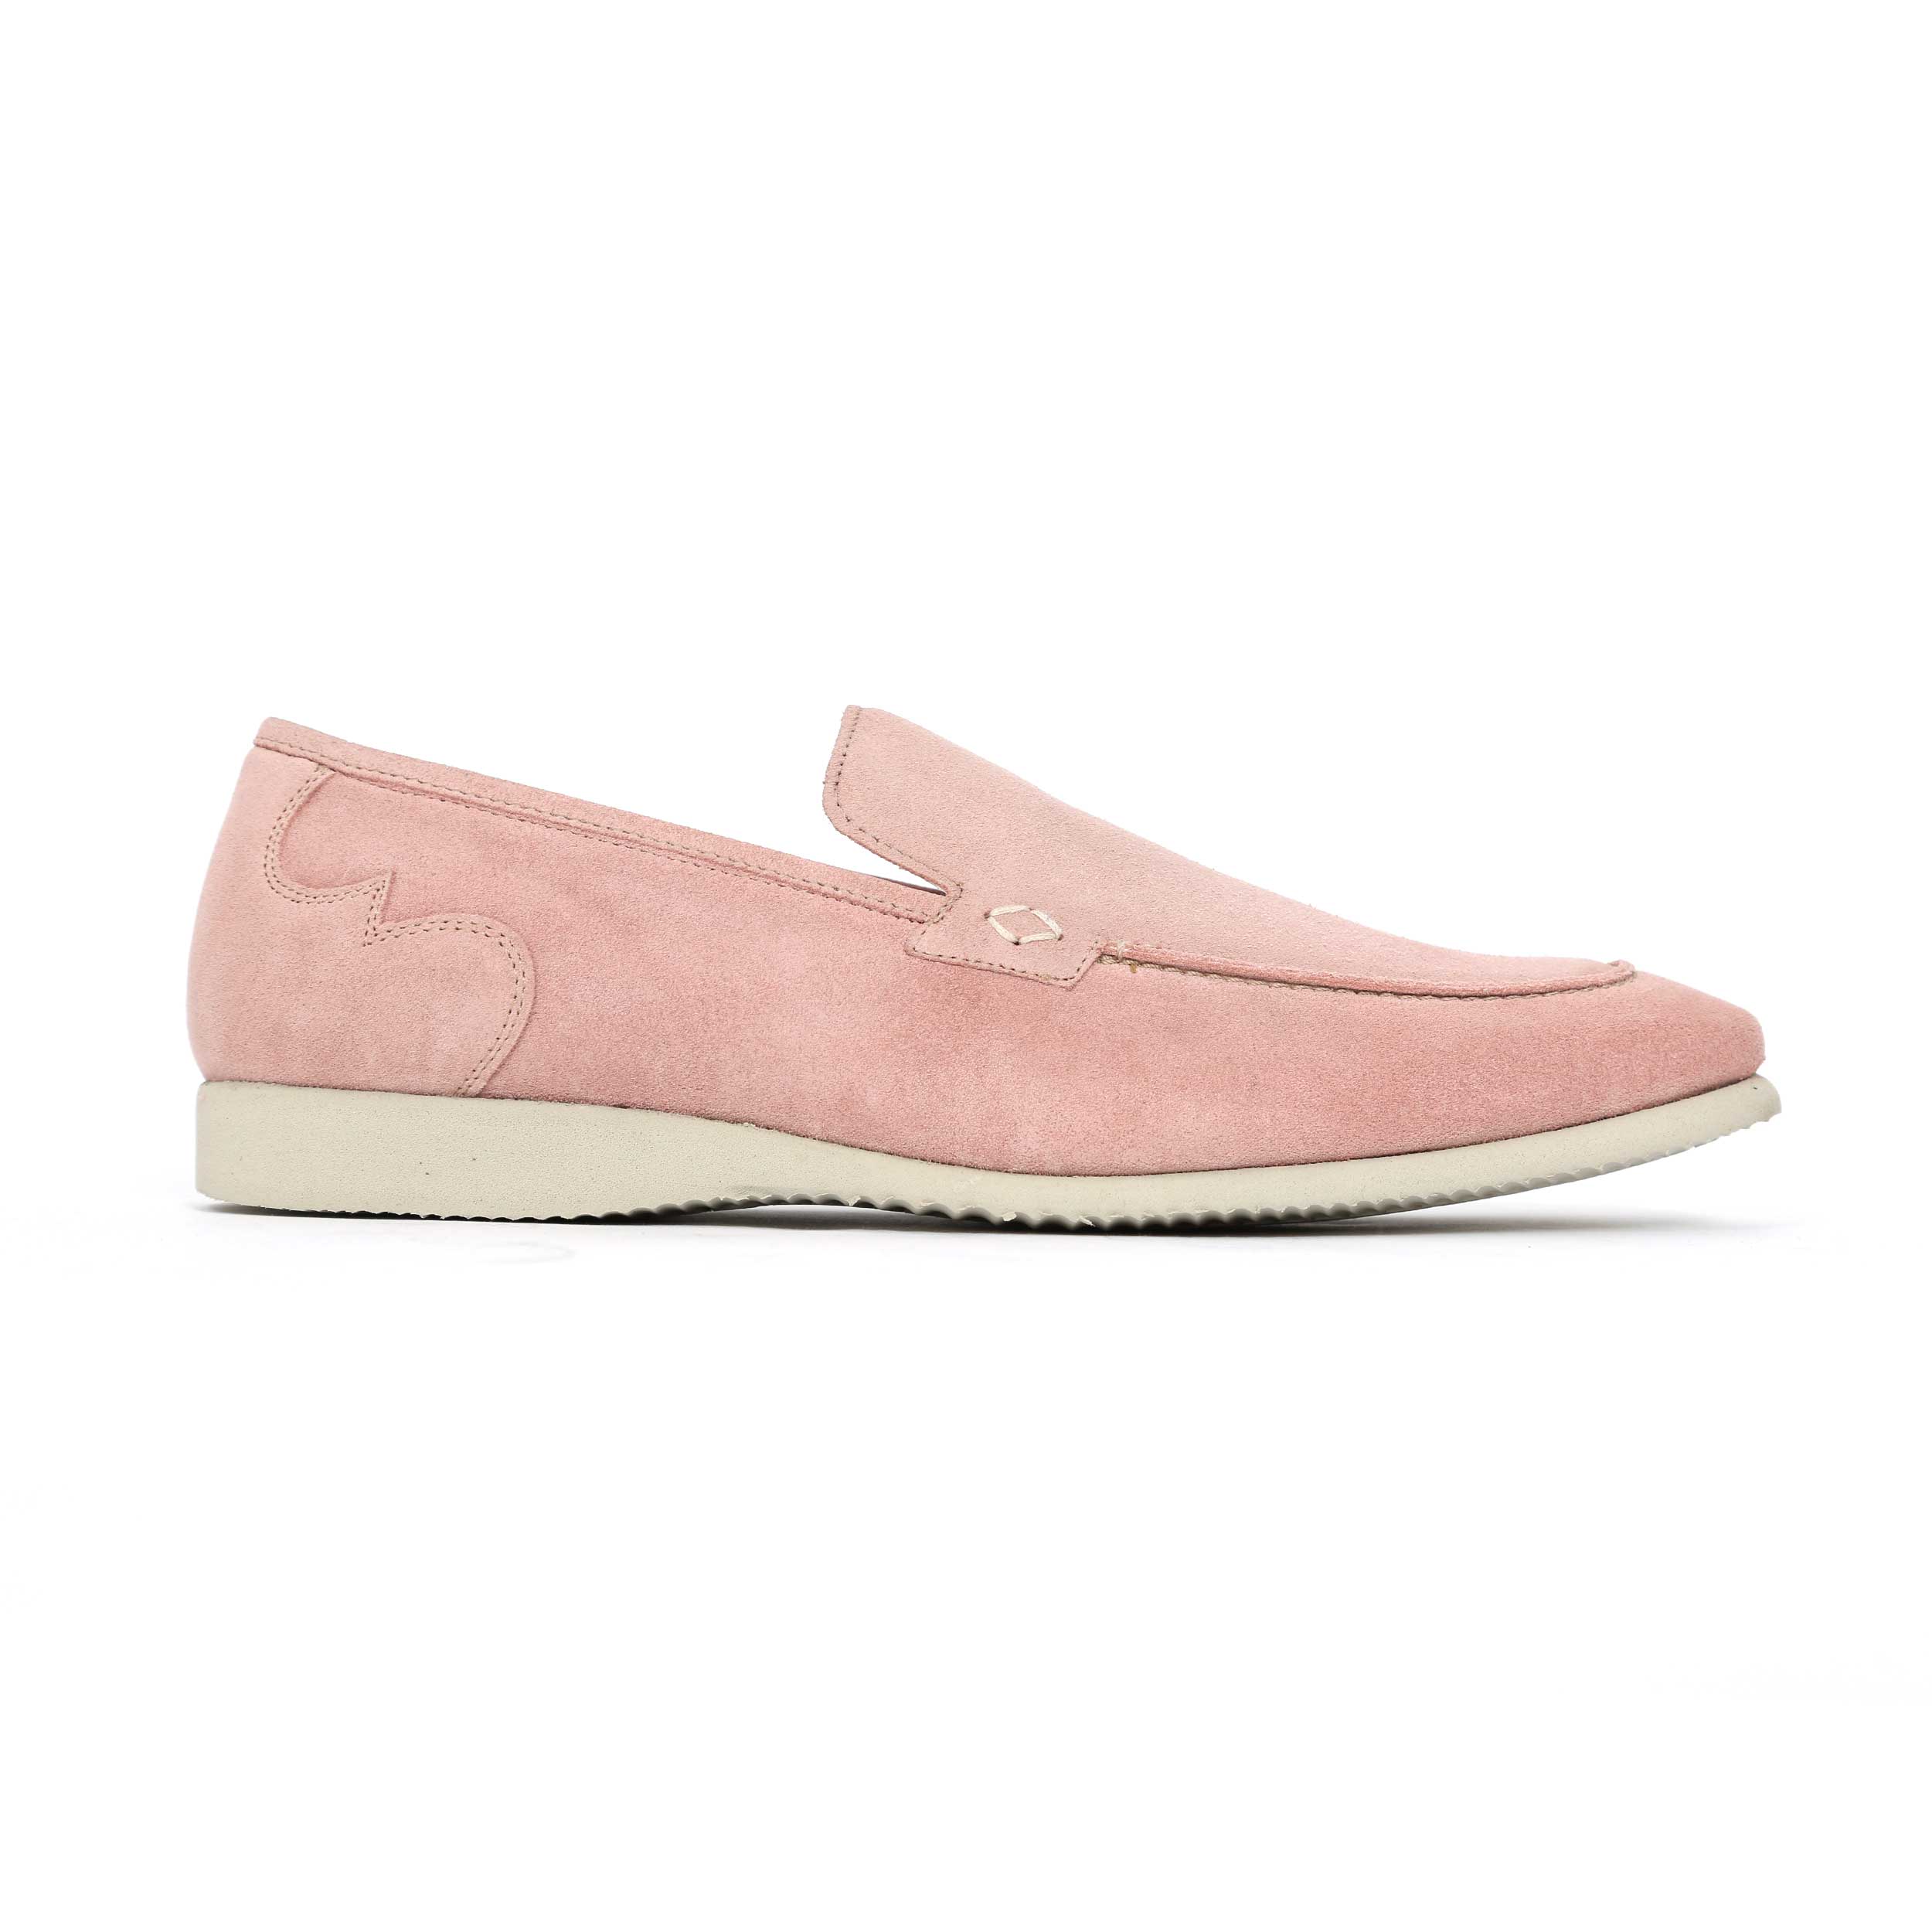 Jeffery West Jung Shoe in Light Pink Suede